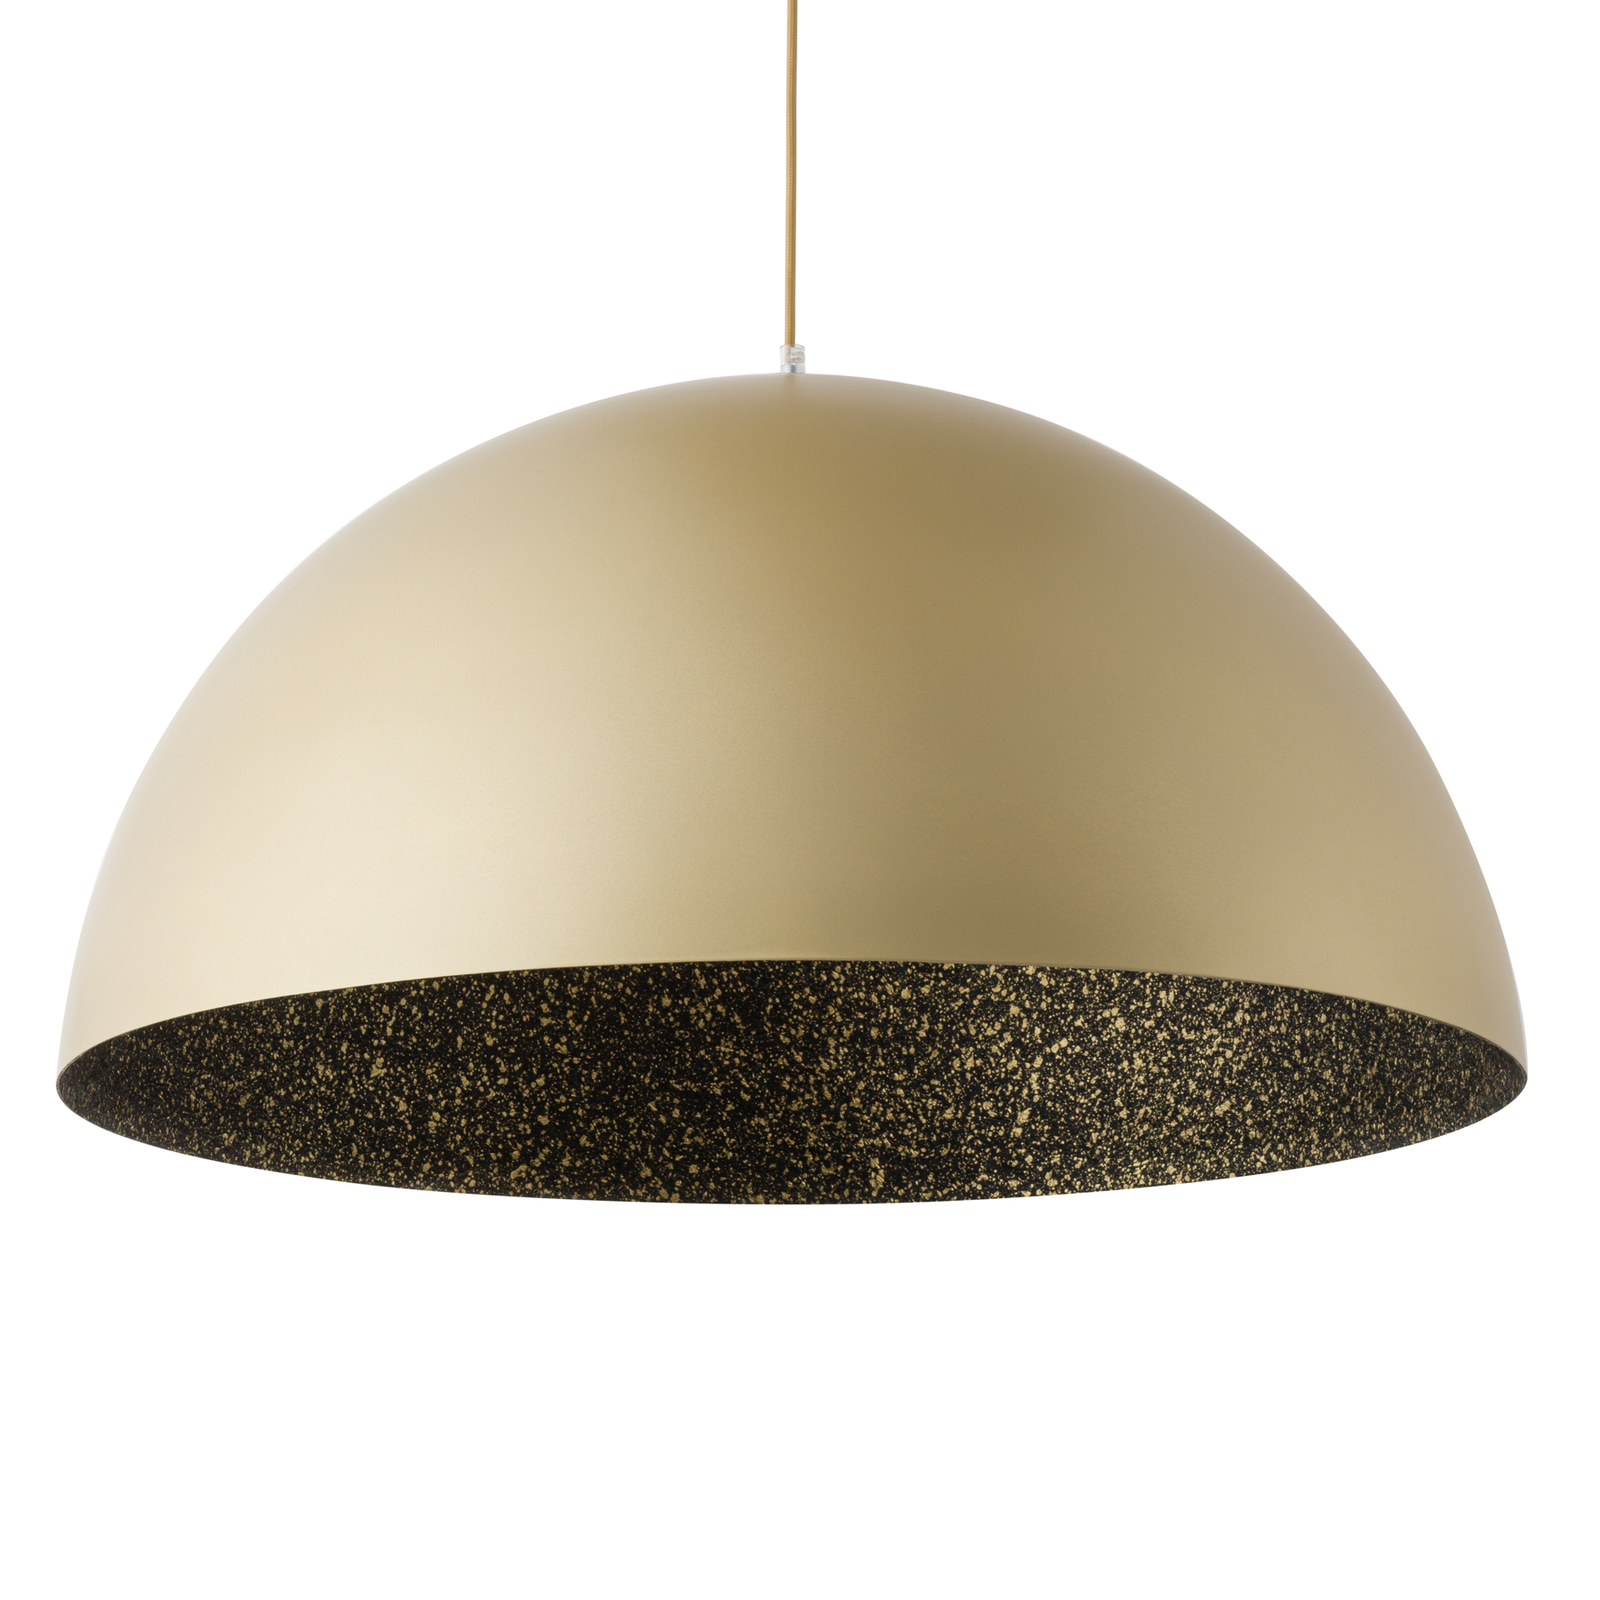 Hanglamp Fera, goud/zwart gesprenkeld, Ø70cm